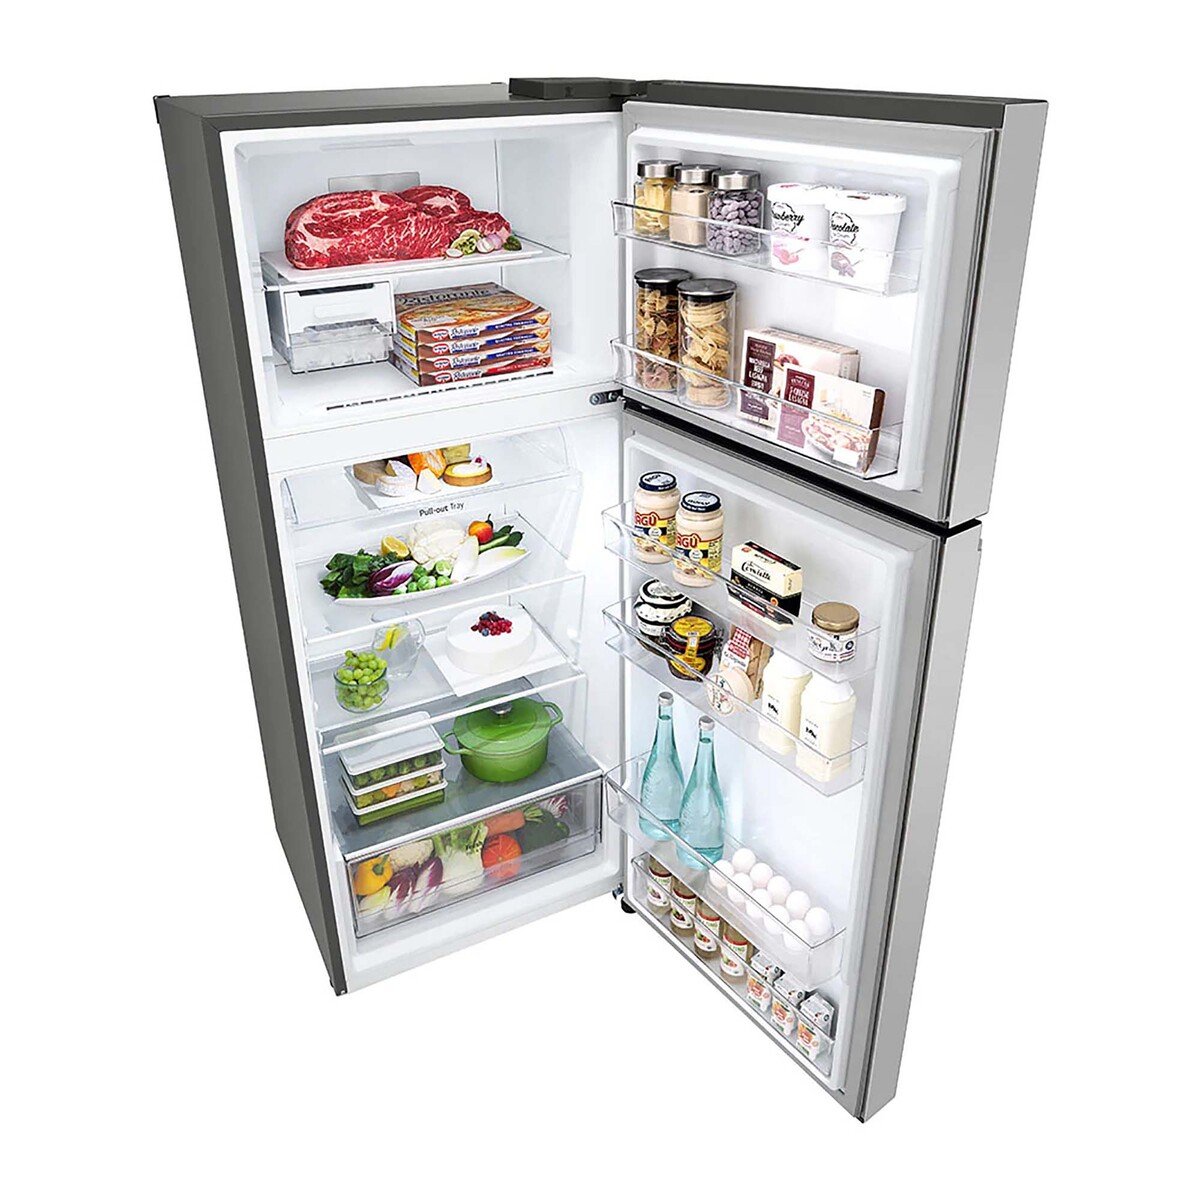 LG Double Door Refrigerator 375LTR, Door Cooling+, Multi Air Flow, Smart Diagnosis, Platinum Silver, GN-B482PLGB